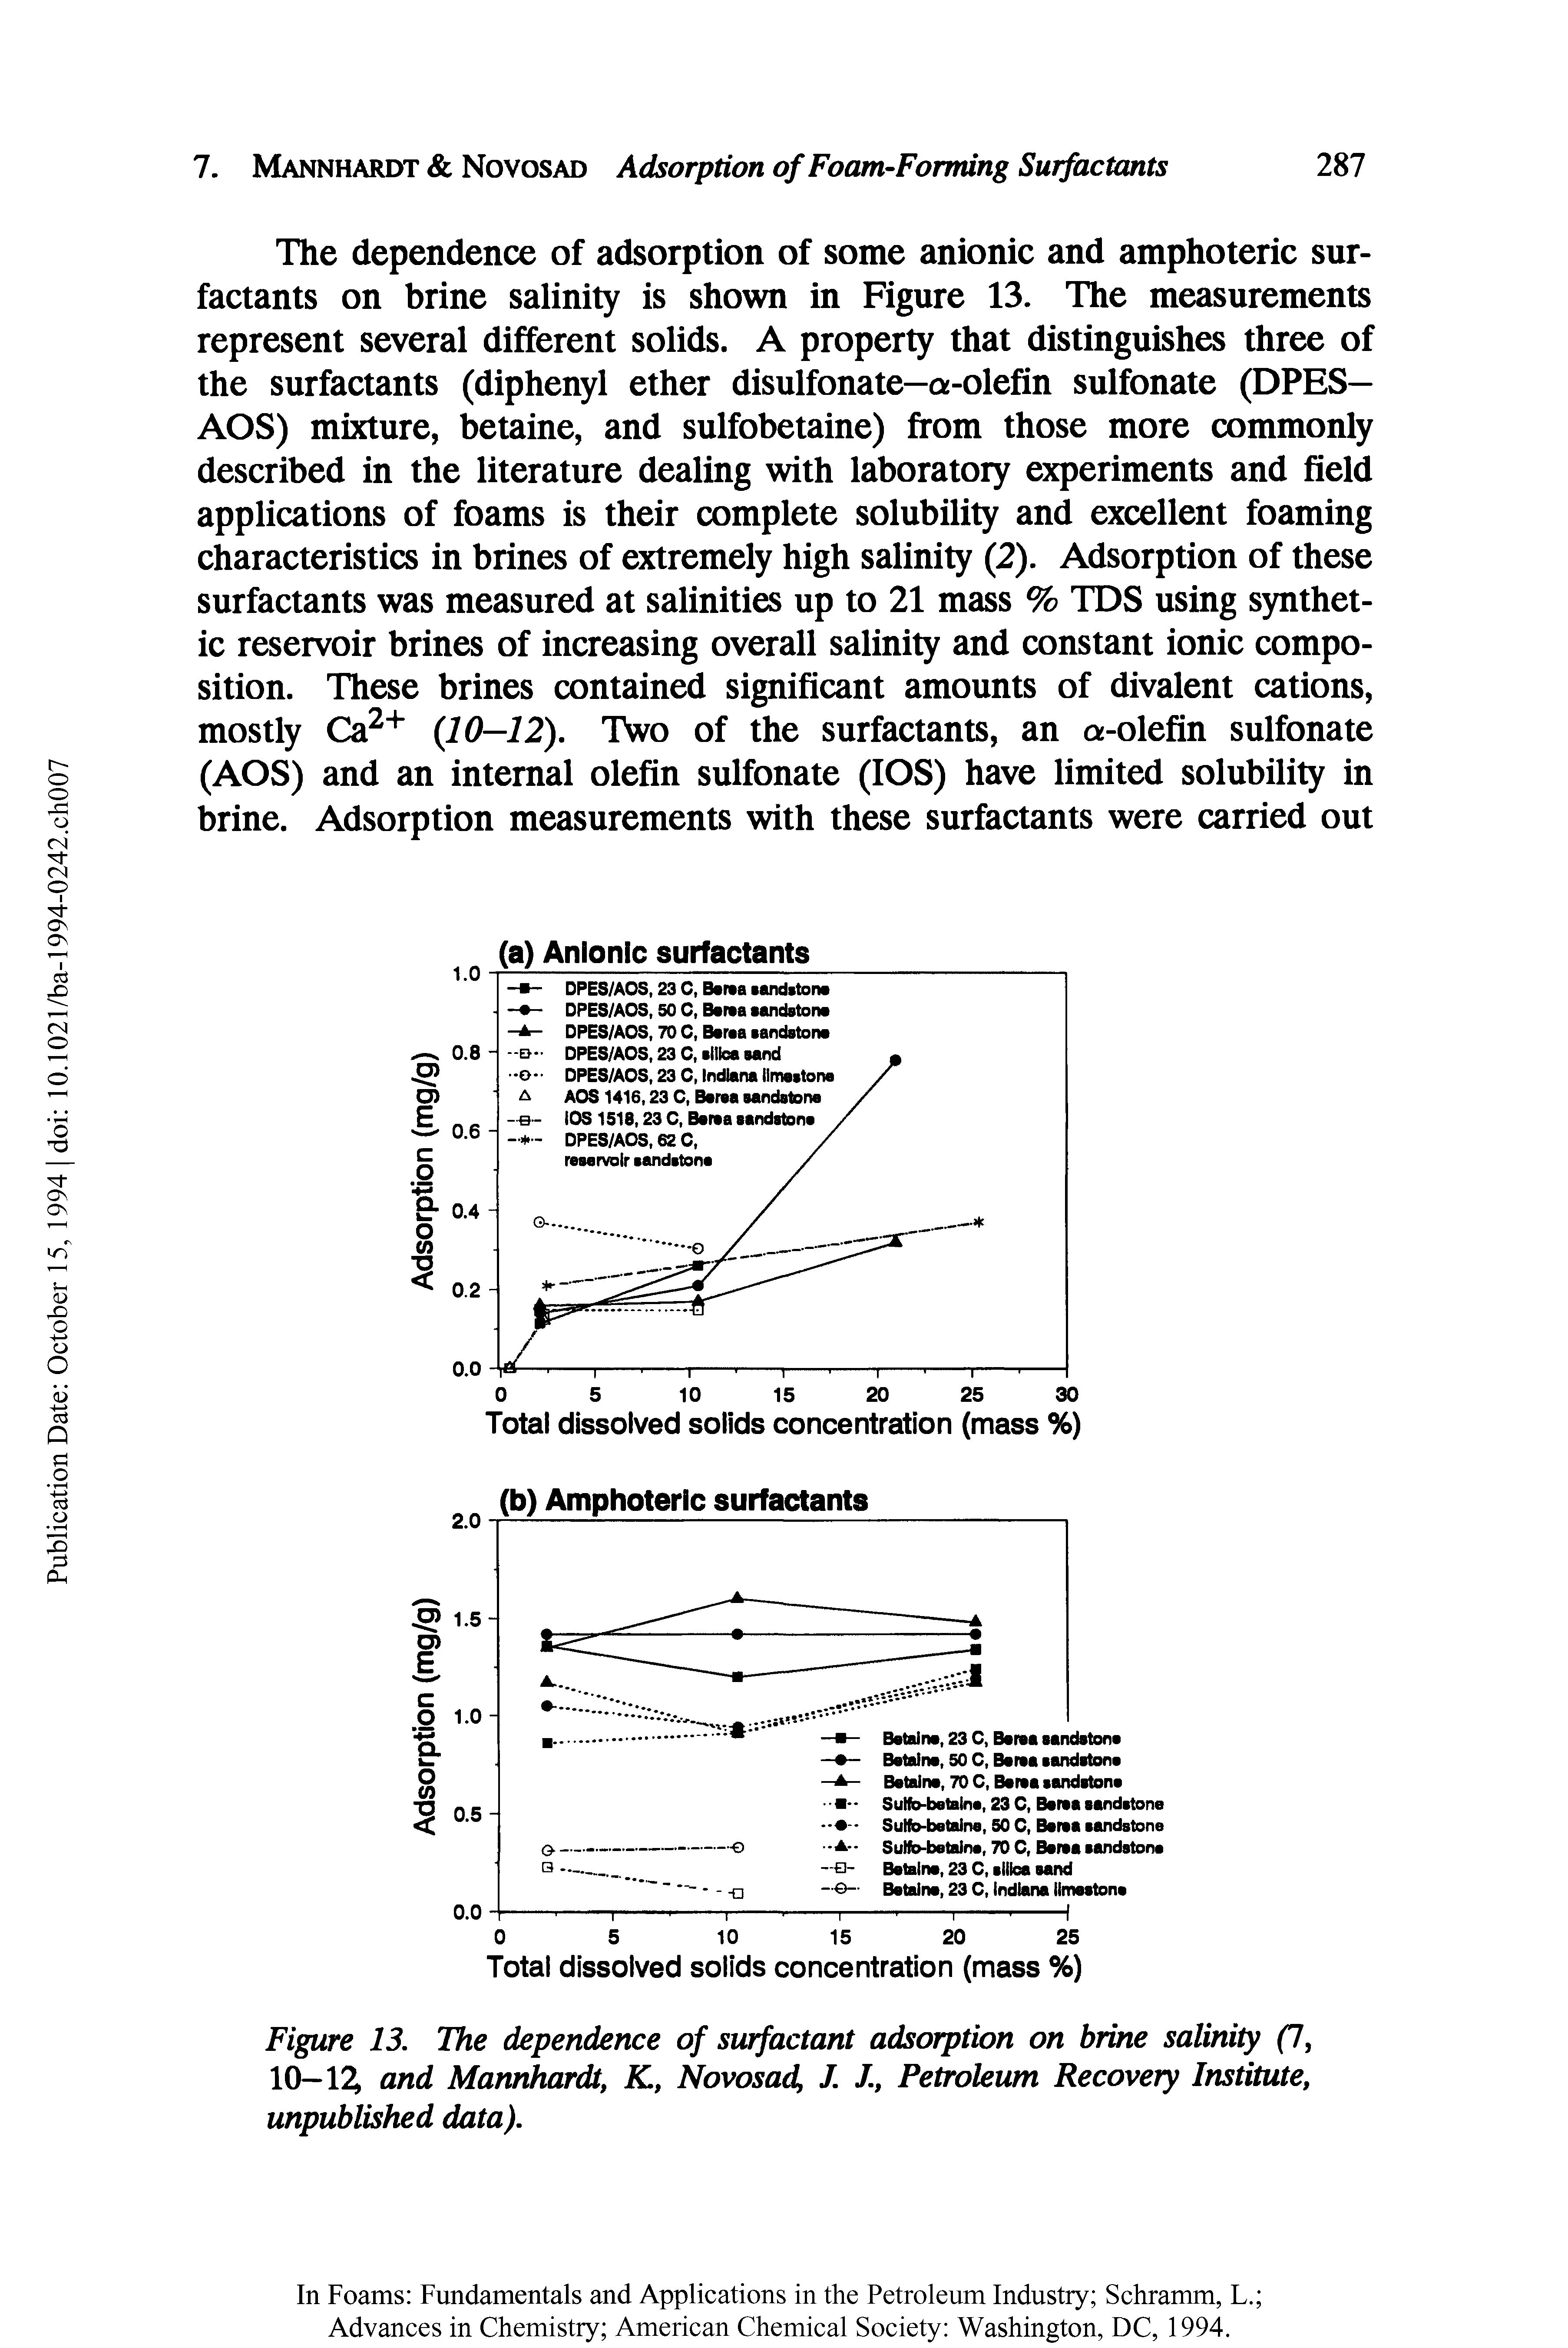 Figure 13. The dependence of surfactant adsorption on brine salinity (7, 10—12 and Mannhardt, K., Novosad, J. Petroleum Recovery Institute, unpublished data).